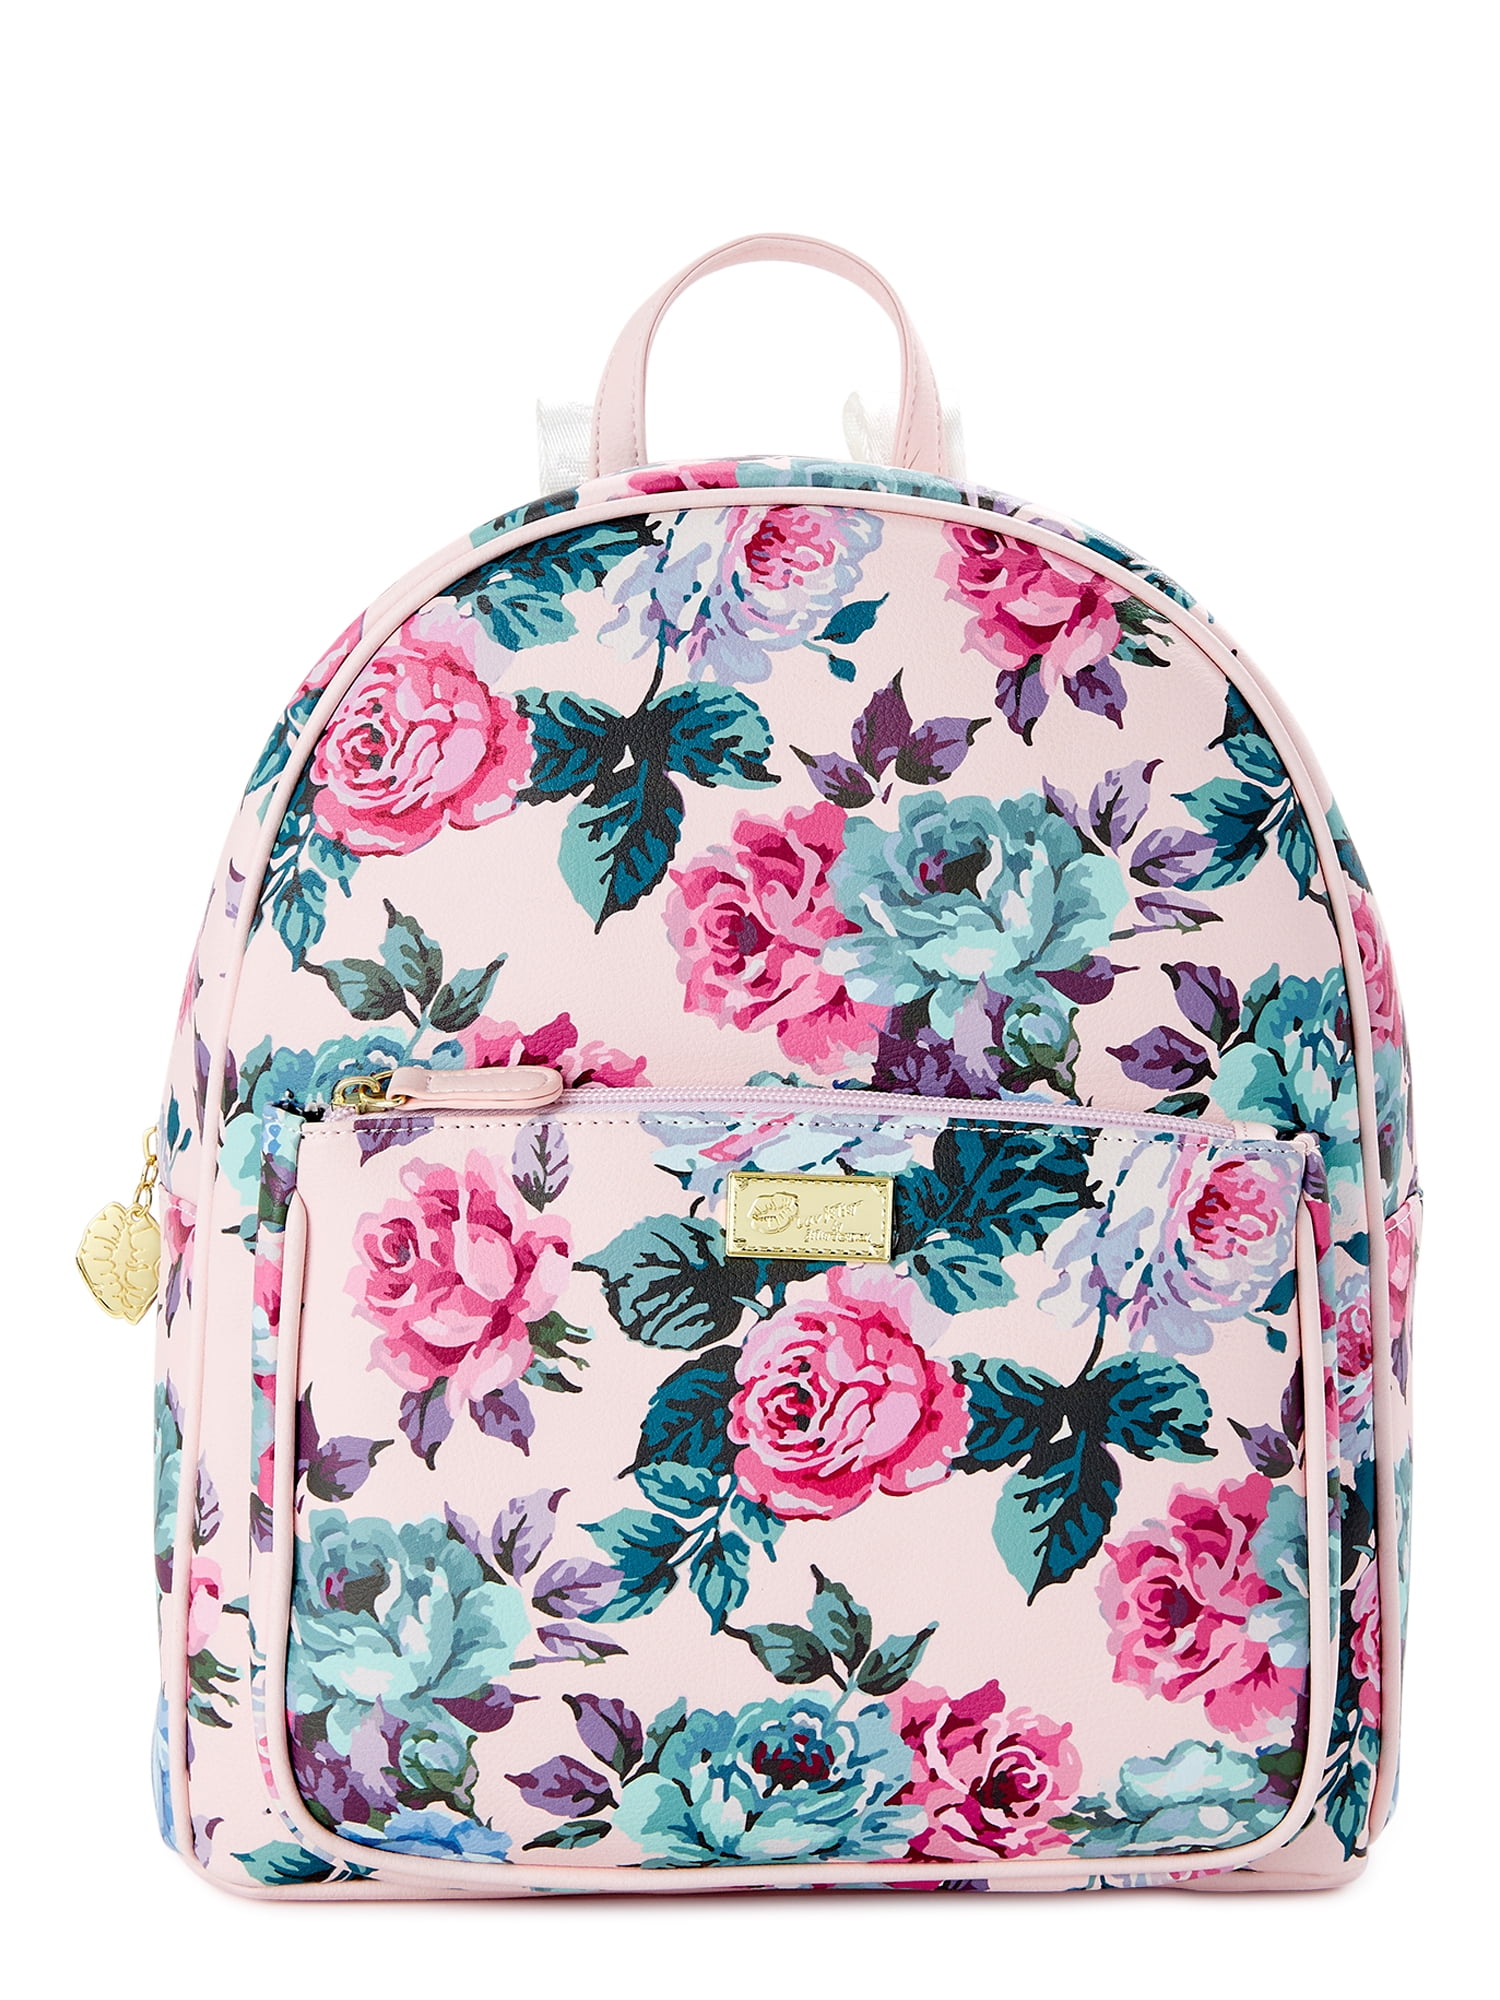 Betsey Johnson Mini Small Convertible Travel Backpack Purse Bookbag Tote Bag 